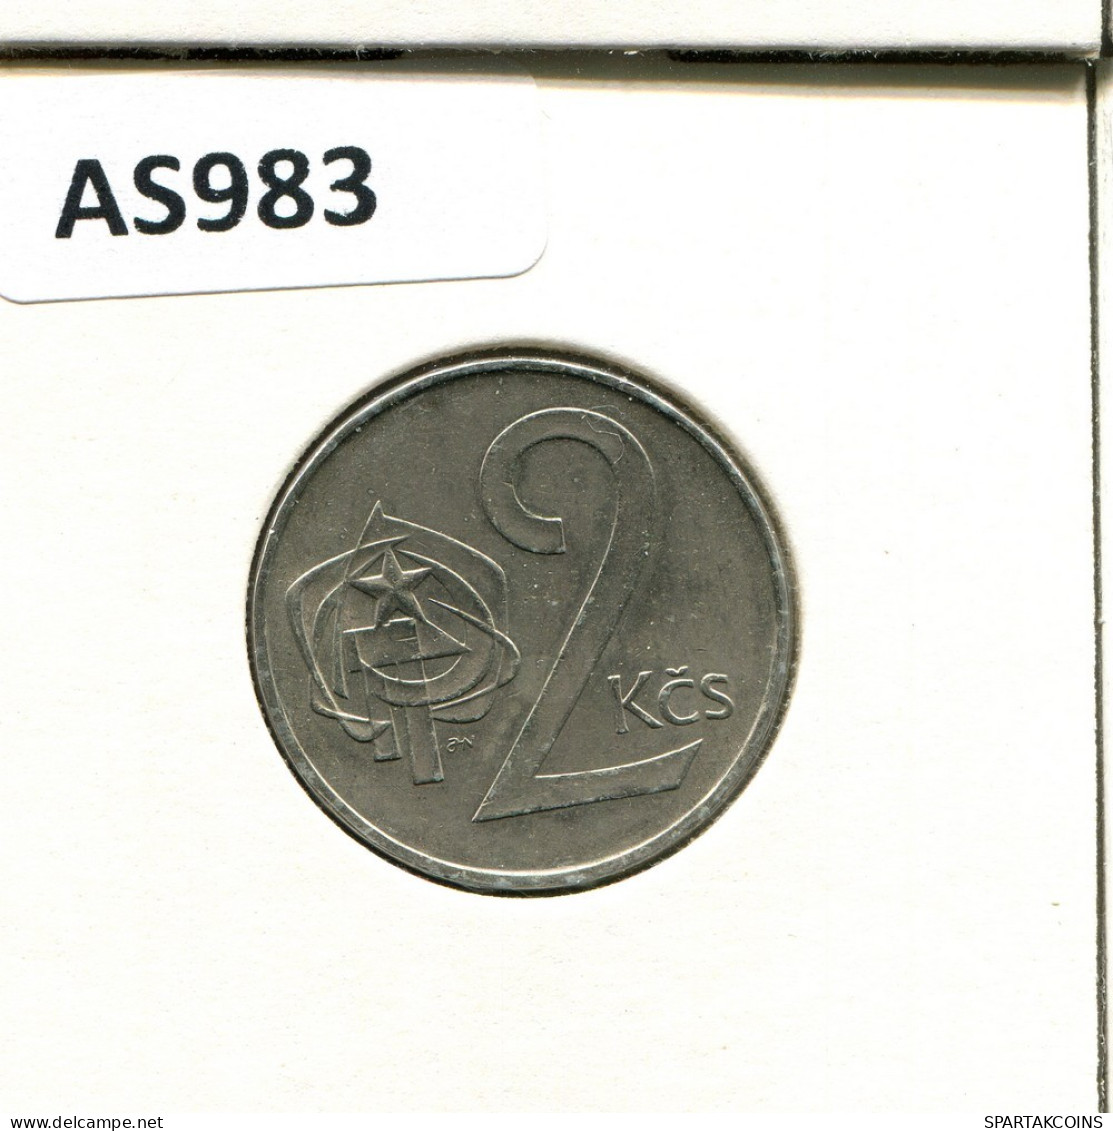 2 KORUN 1989 TSCHECHOSLOWAKEI CZECHOSLOWAKEI SLOVAKIA Münze #AS983.D.A - Cecoslovacchia